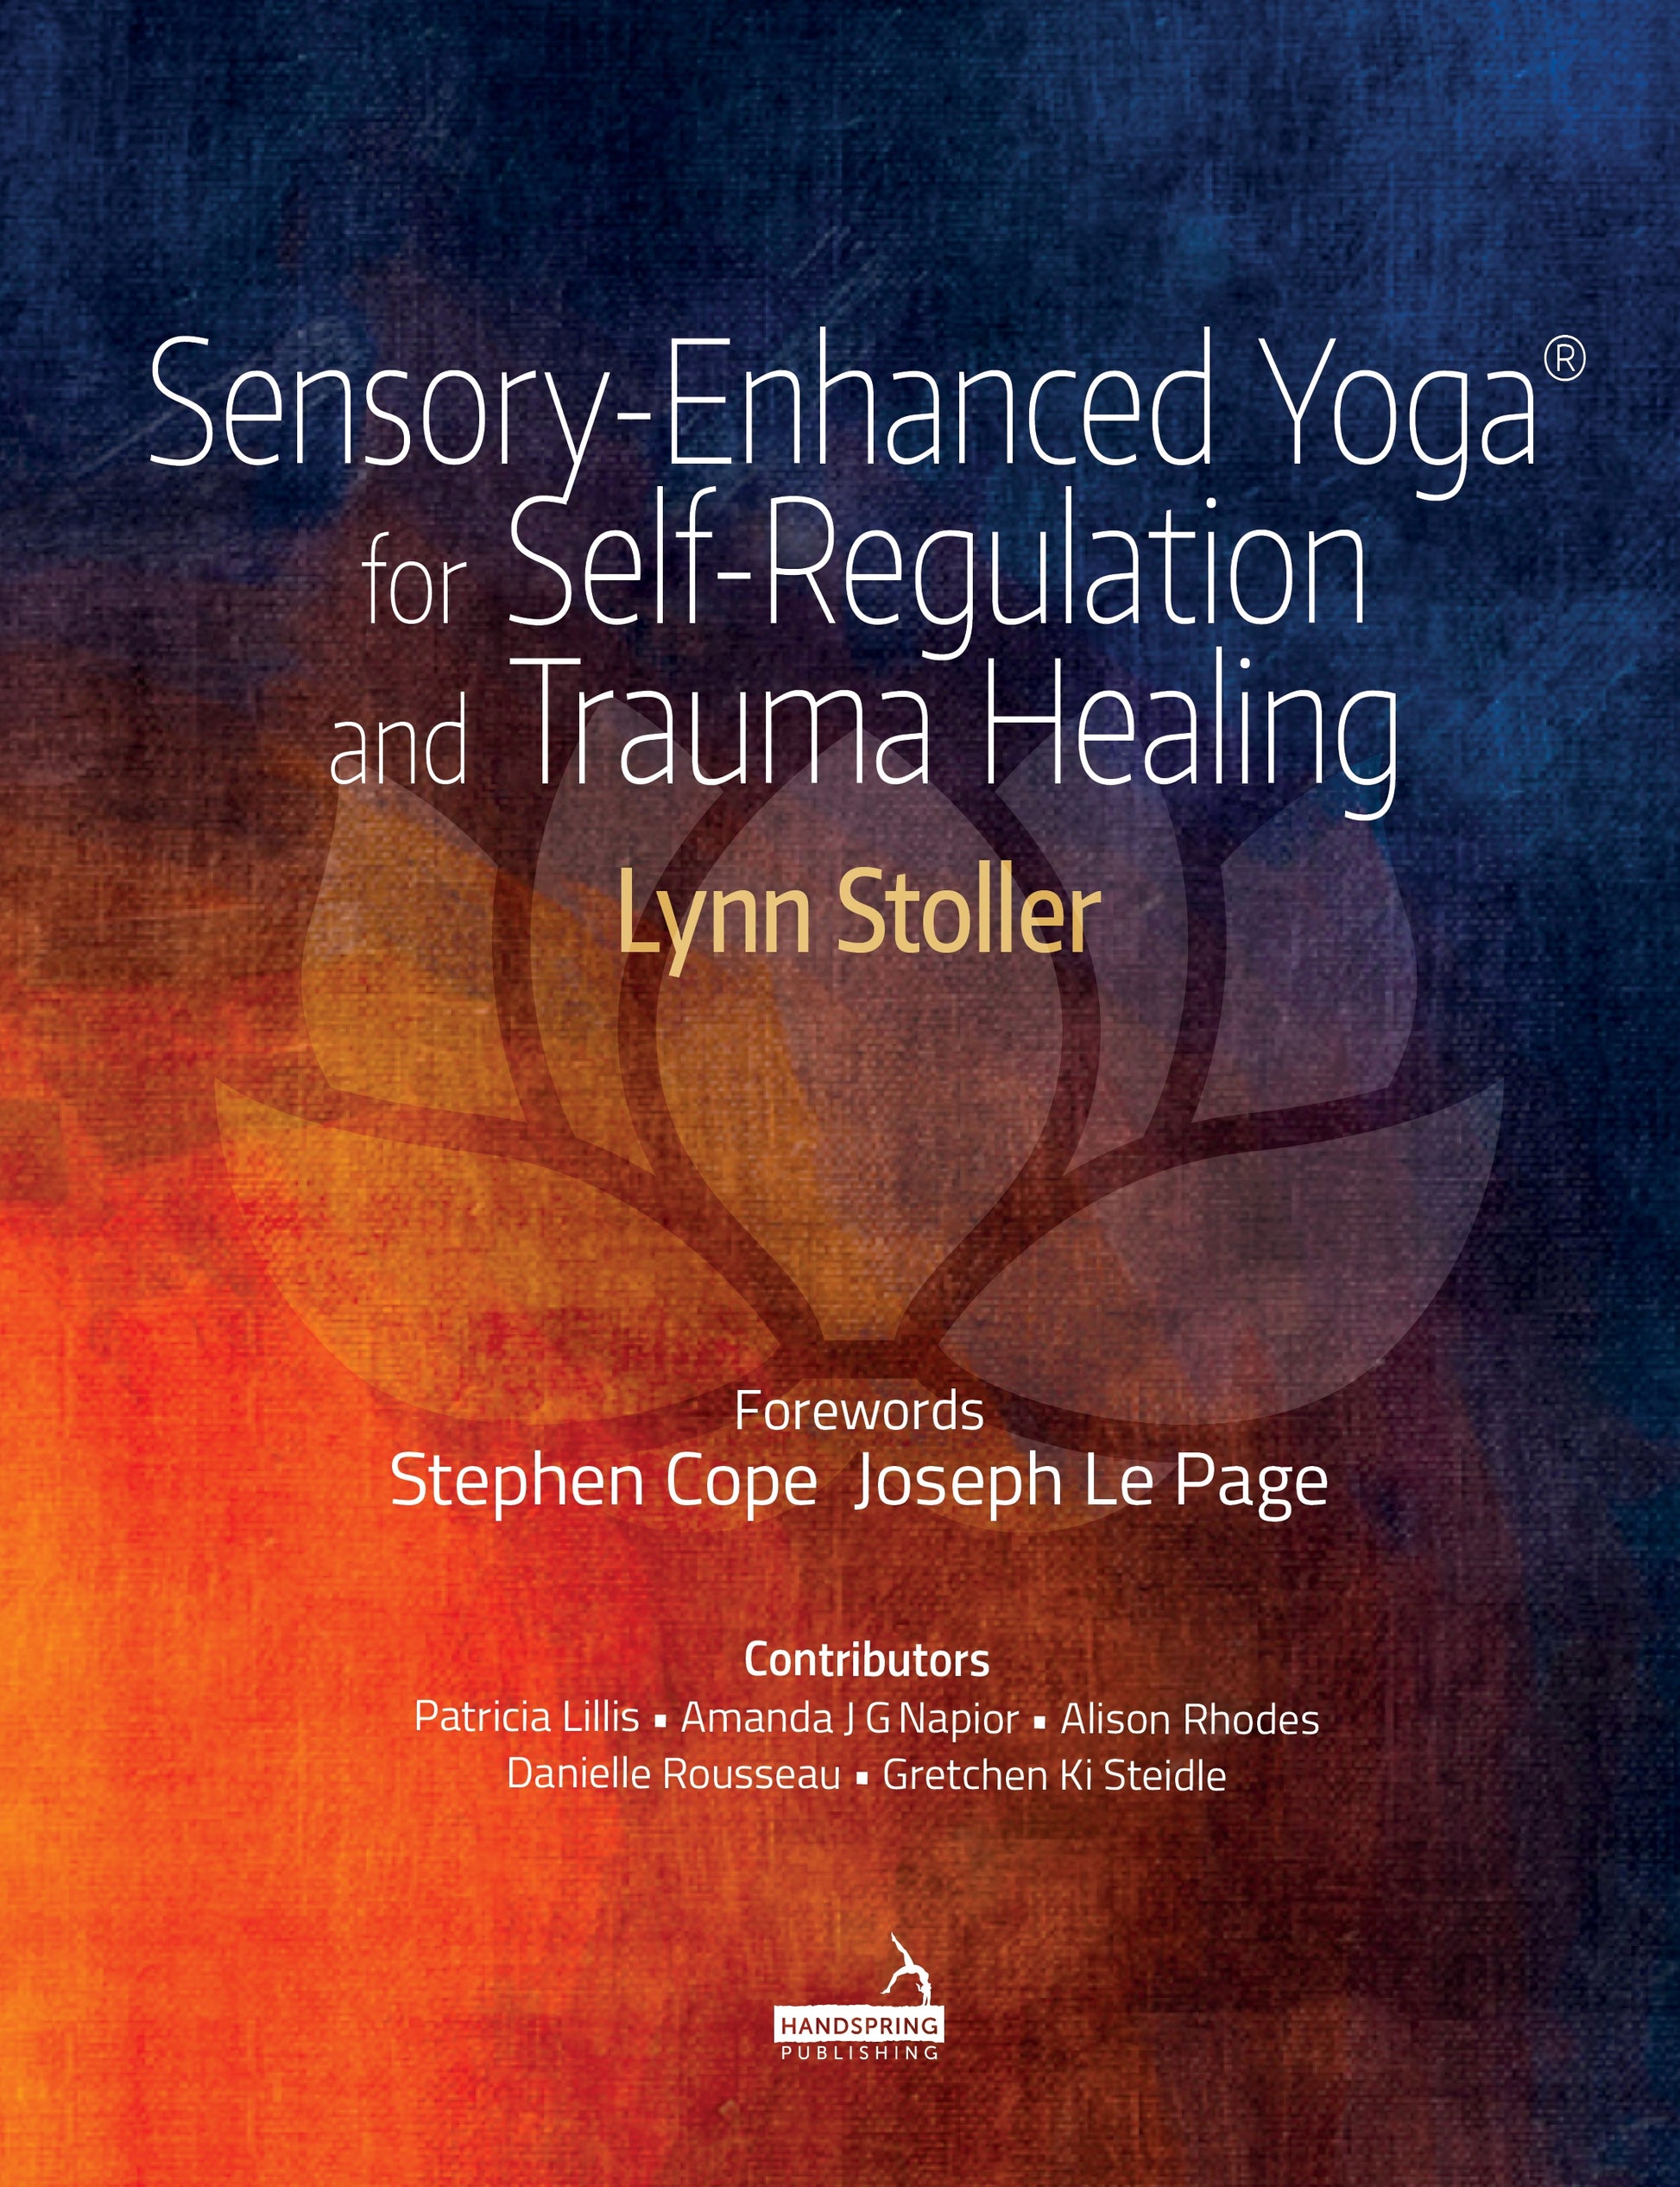 Sensory-Enhanced Yoga® for Self-regulation and Trauma Healing by Lynn Stoller